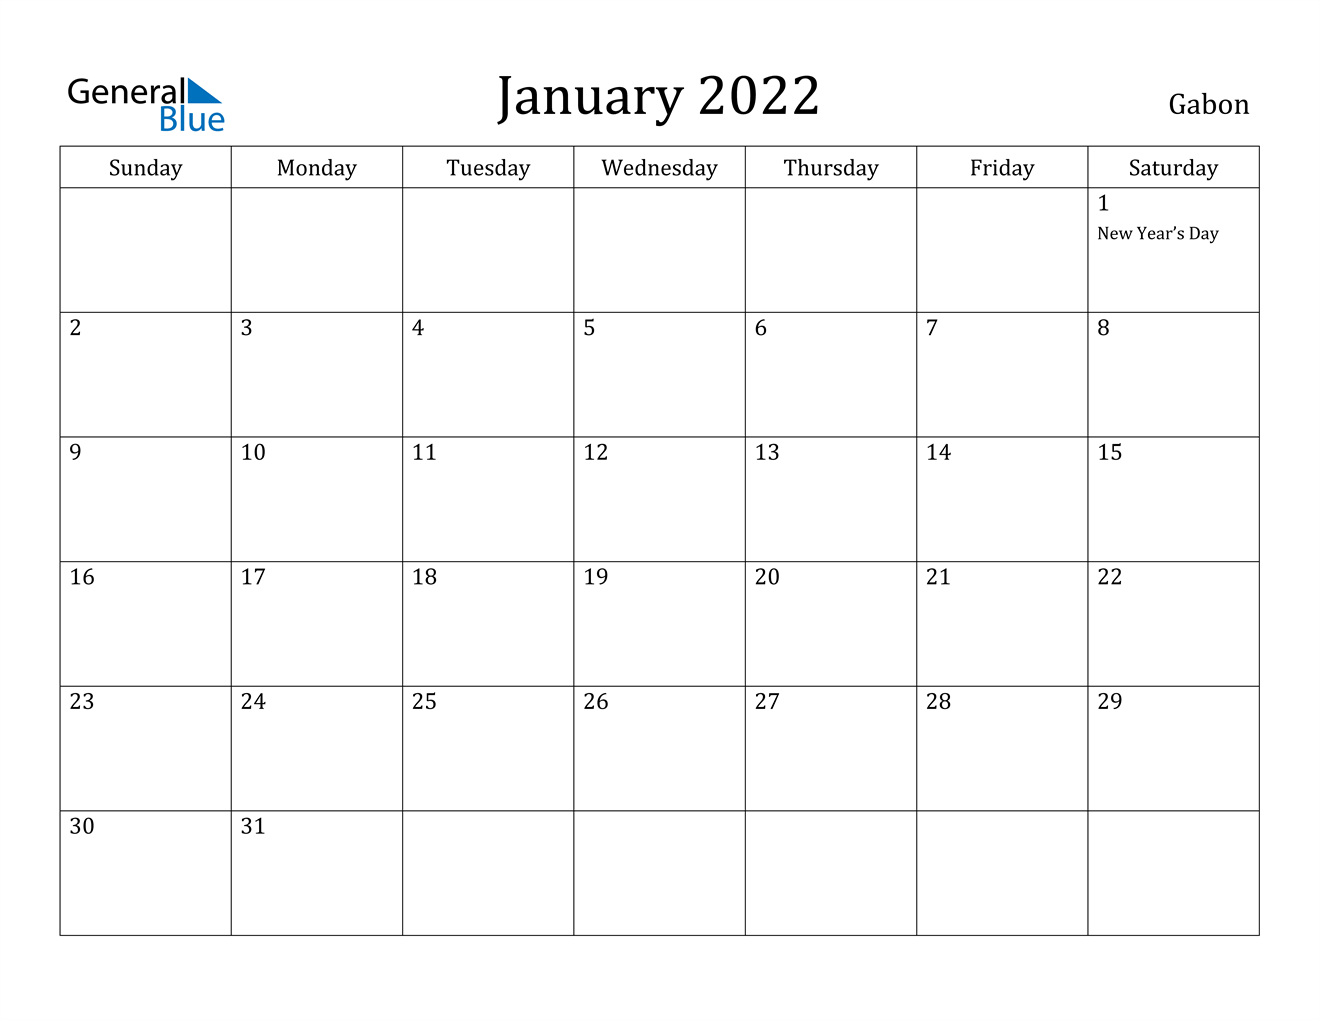 January 2022 Calendar - Gabon